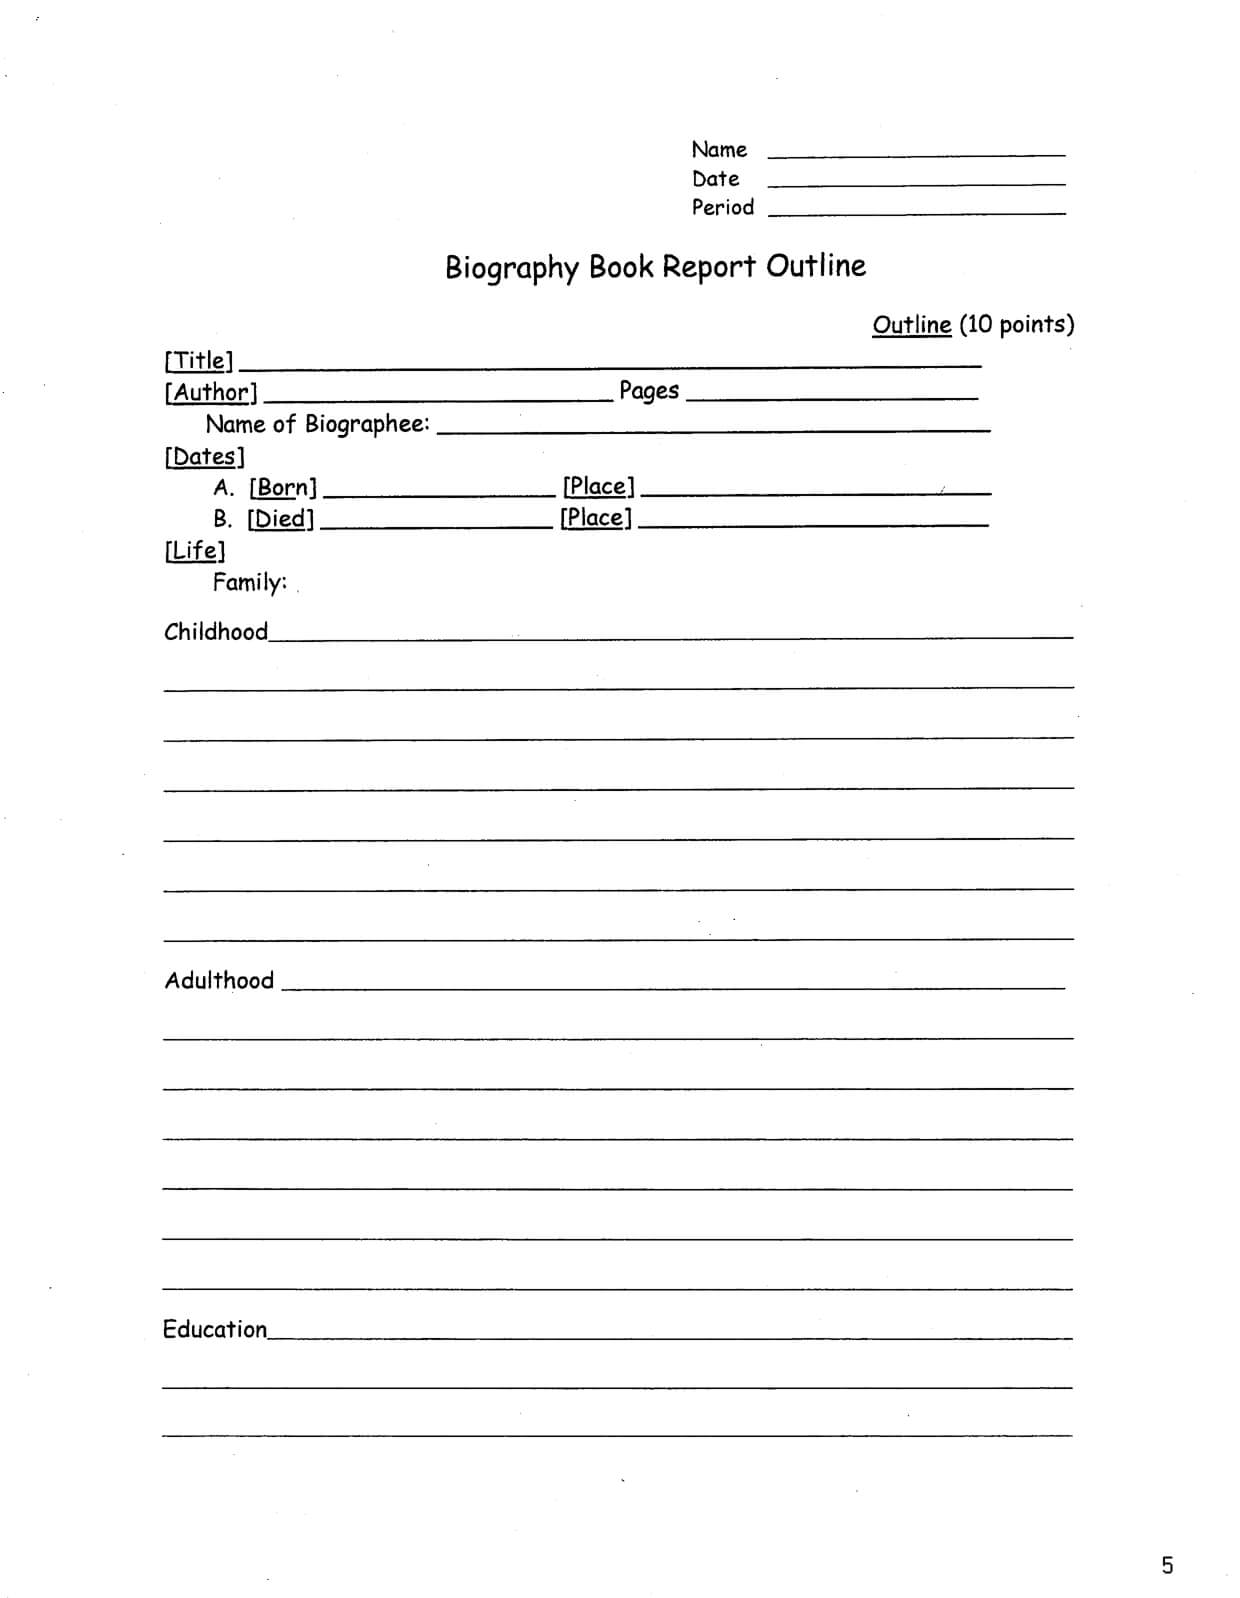 013 Biography Book Report Template Ideas Outline 83330 Regarding High School Book Report Template